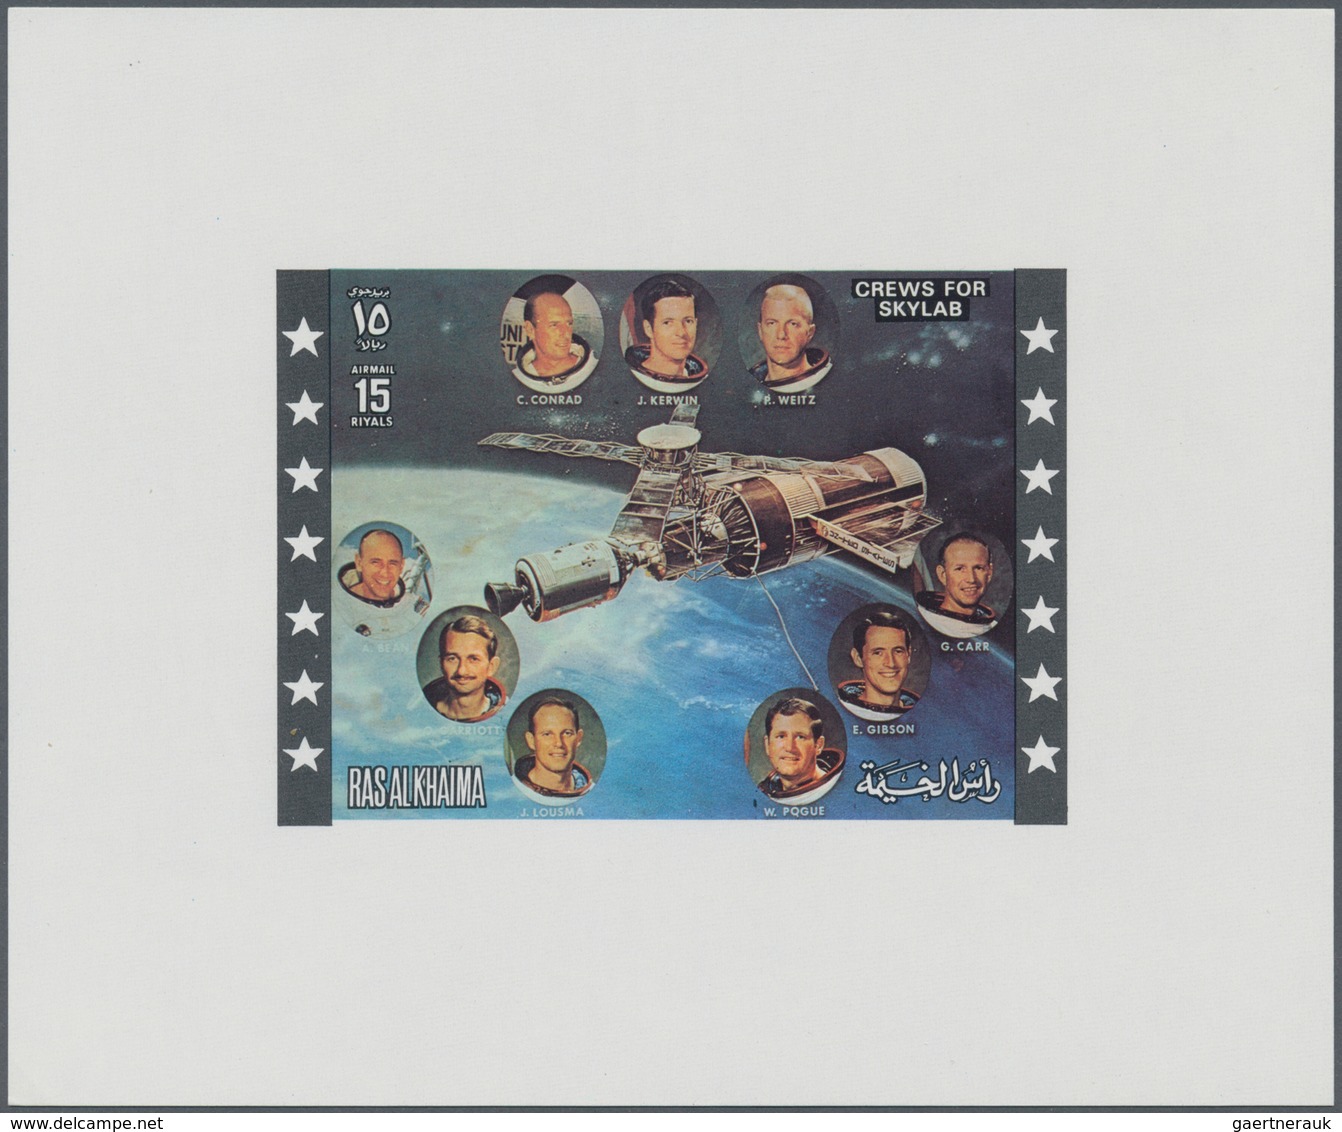 09670 Ras al Khaima: 1972, Skylab Program, DE LUXE SHEETS, complete set of three values in three different